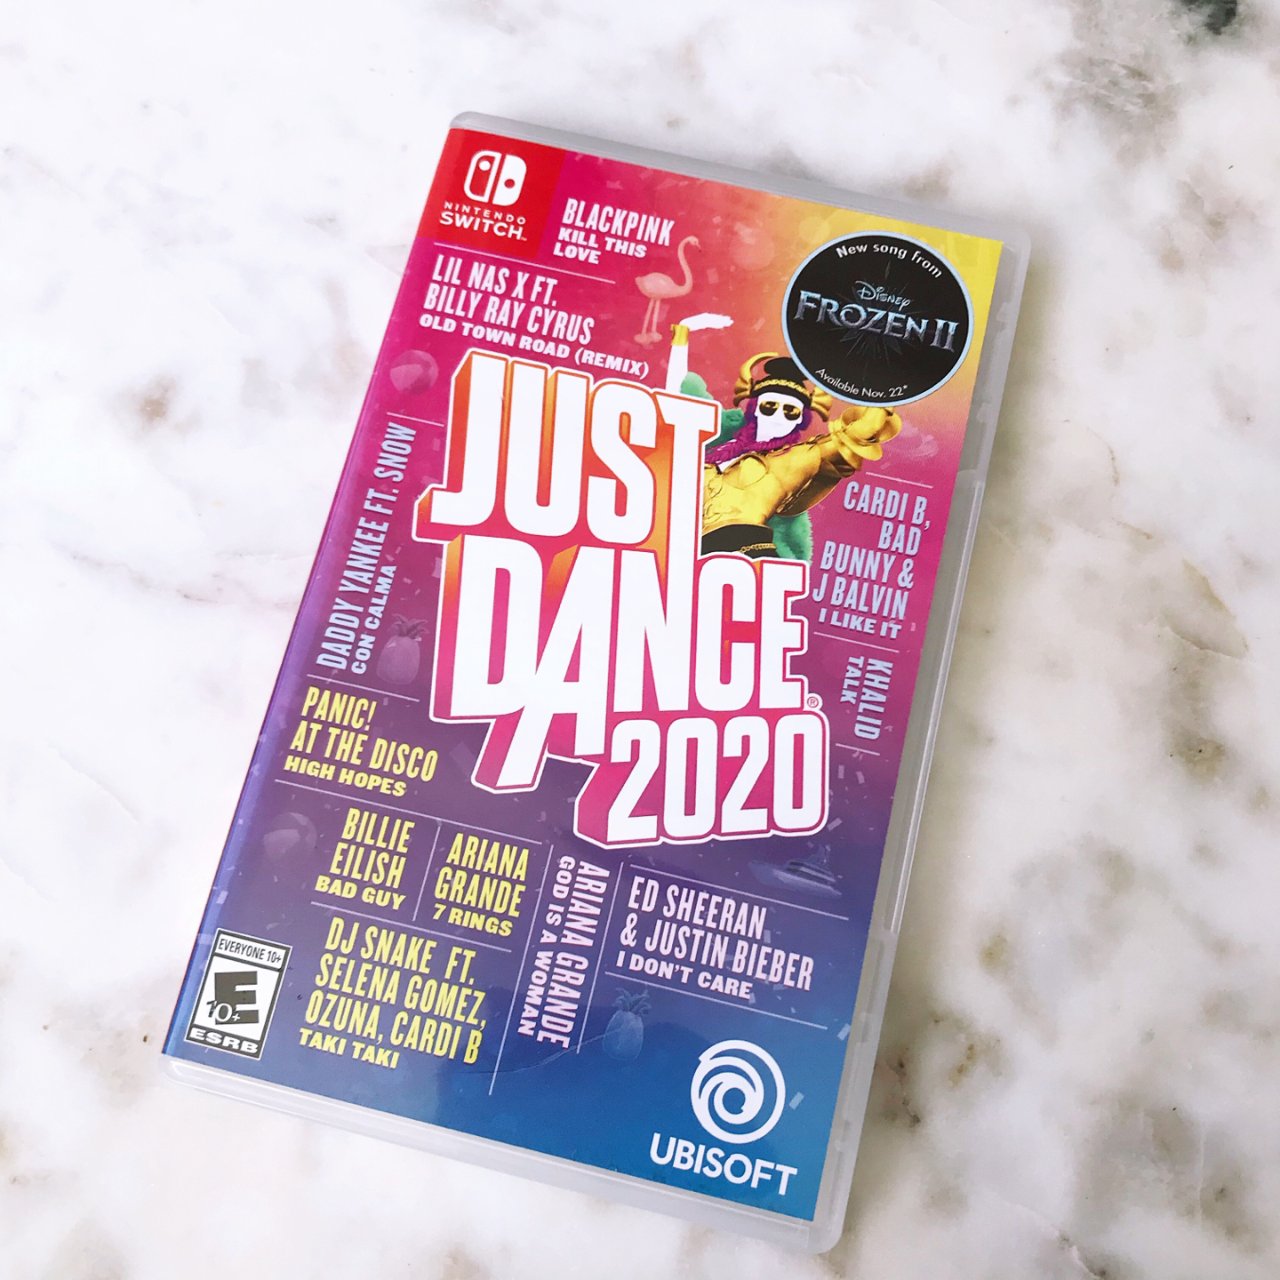 Just dance 2020